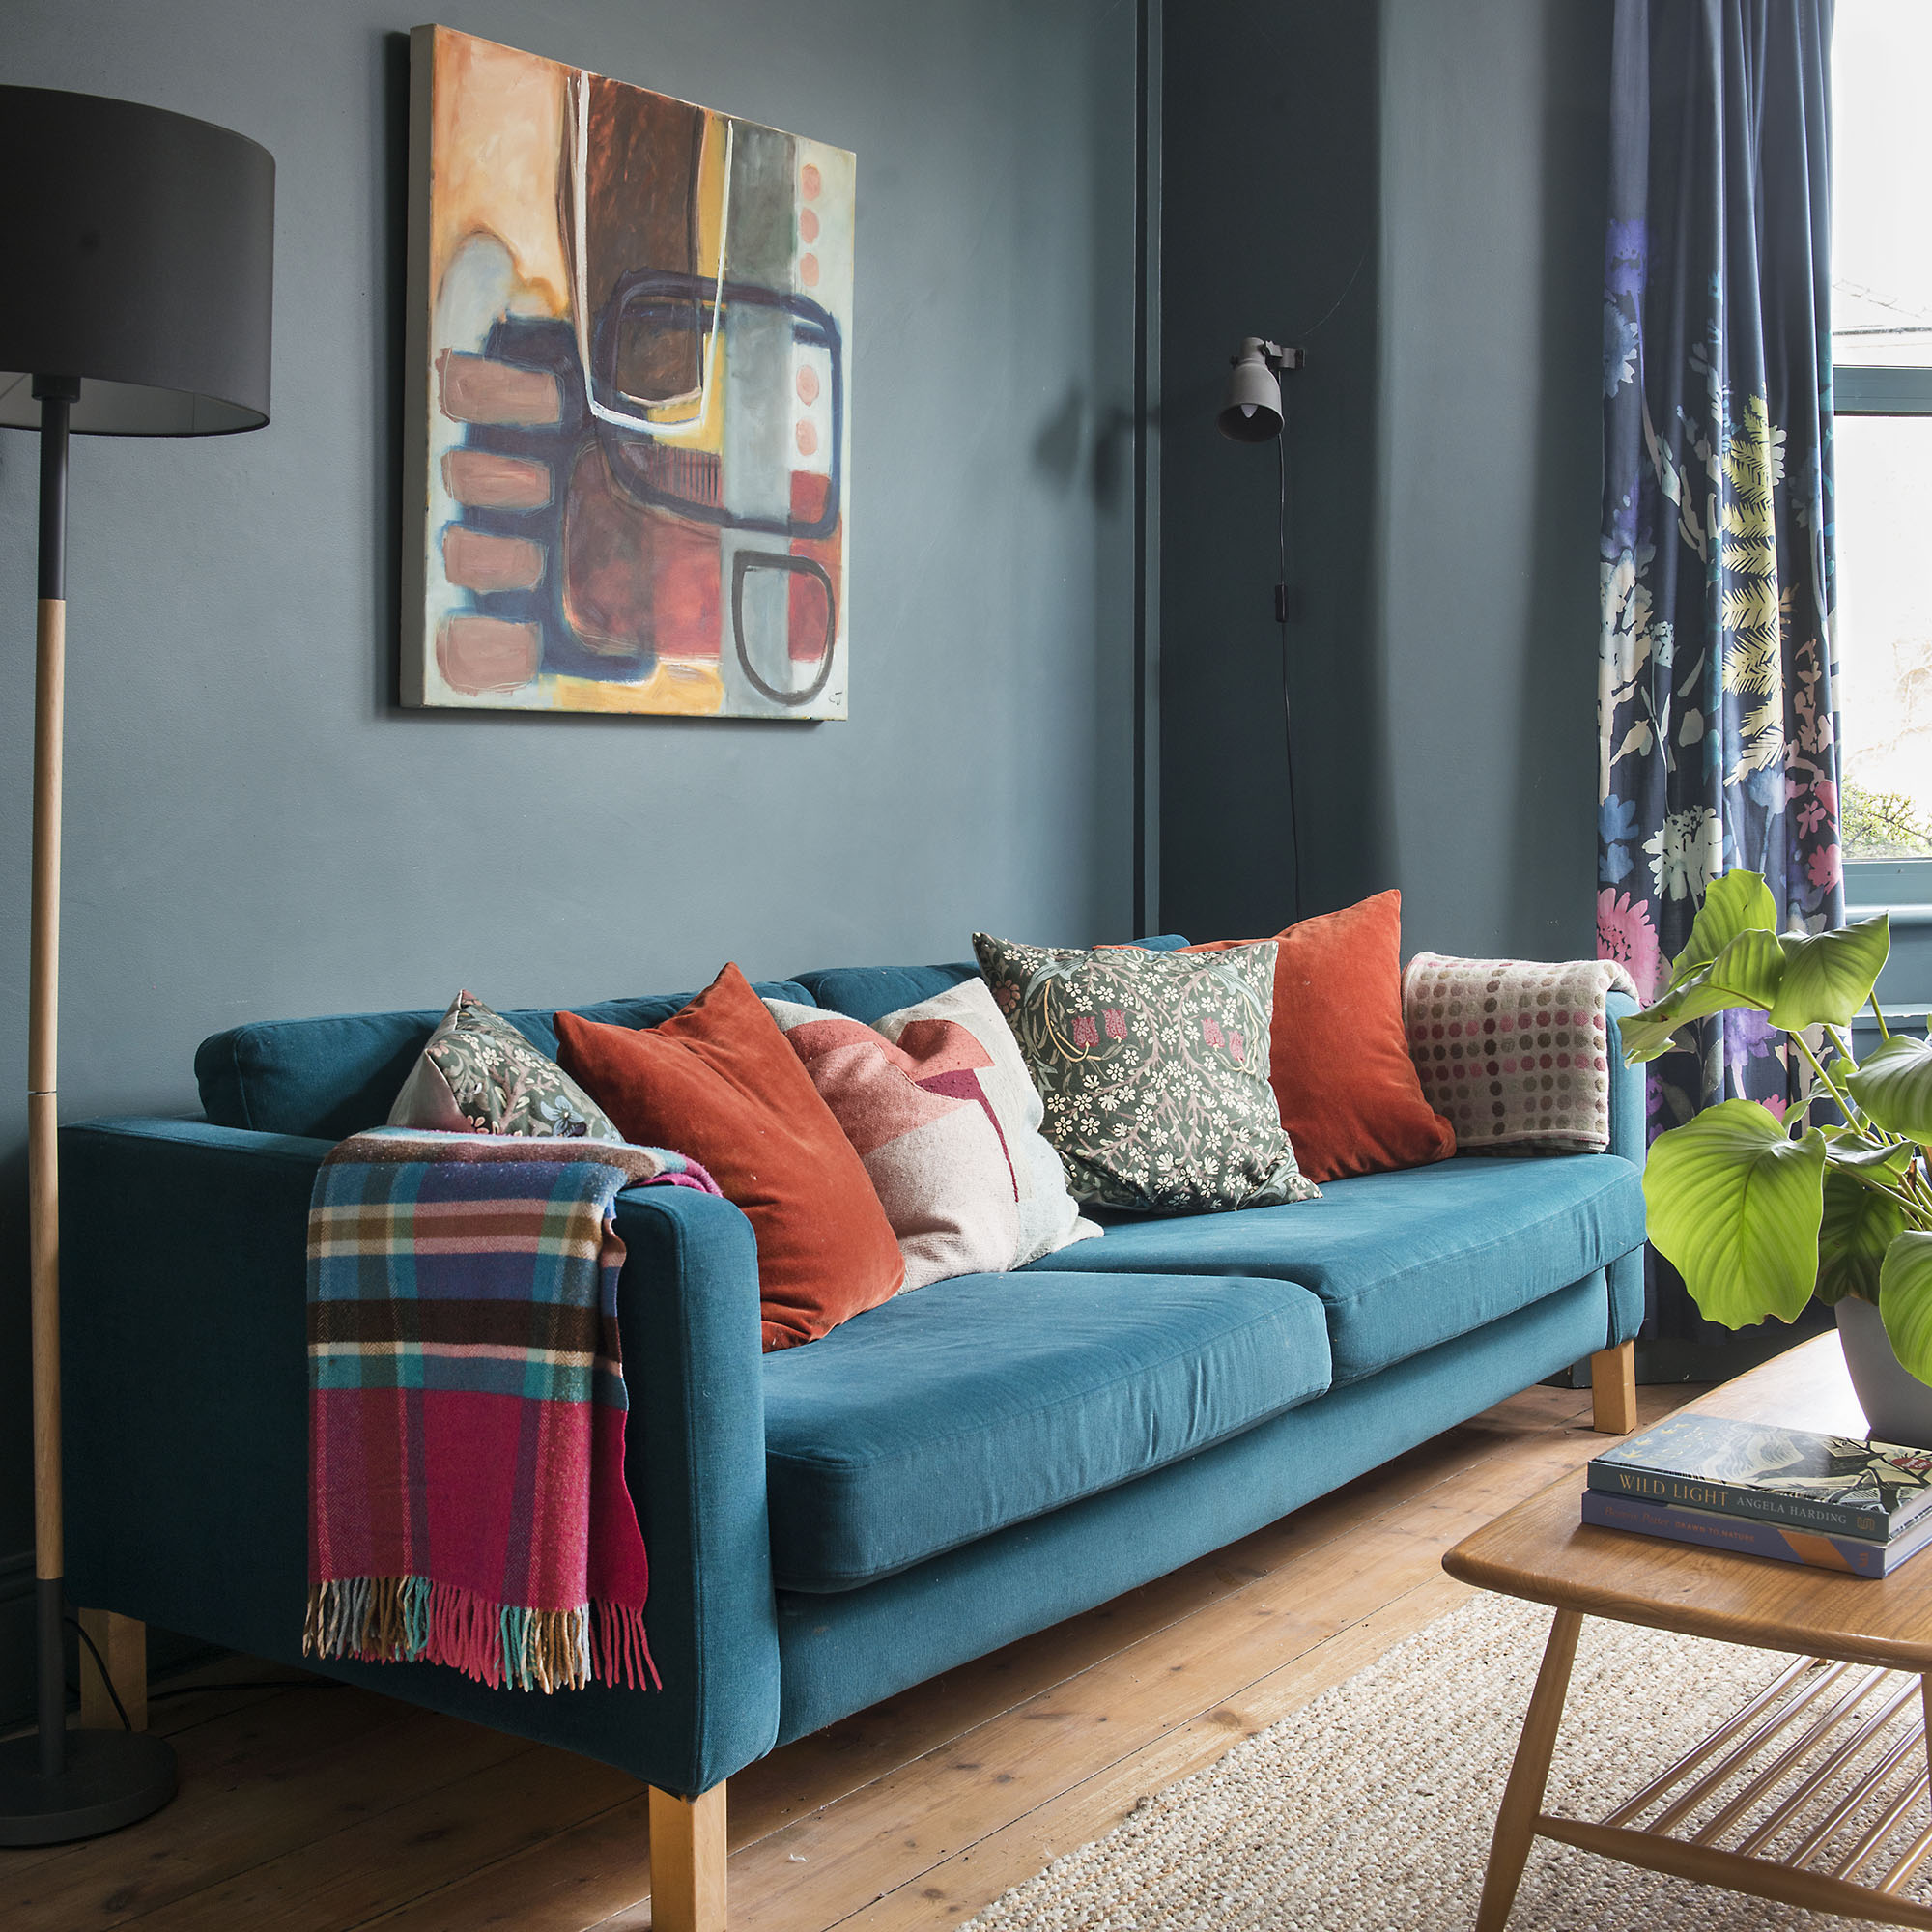 6 Tips To Arrange Cushions On Sofa